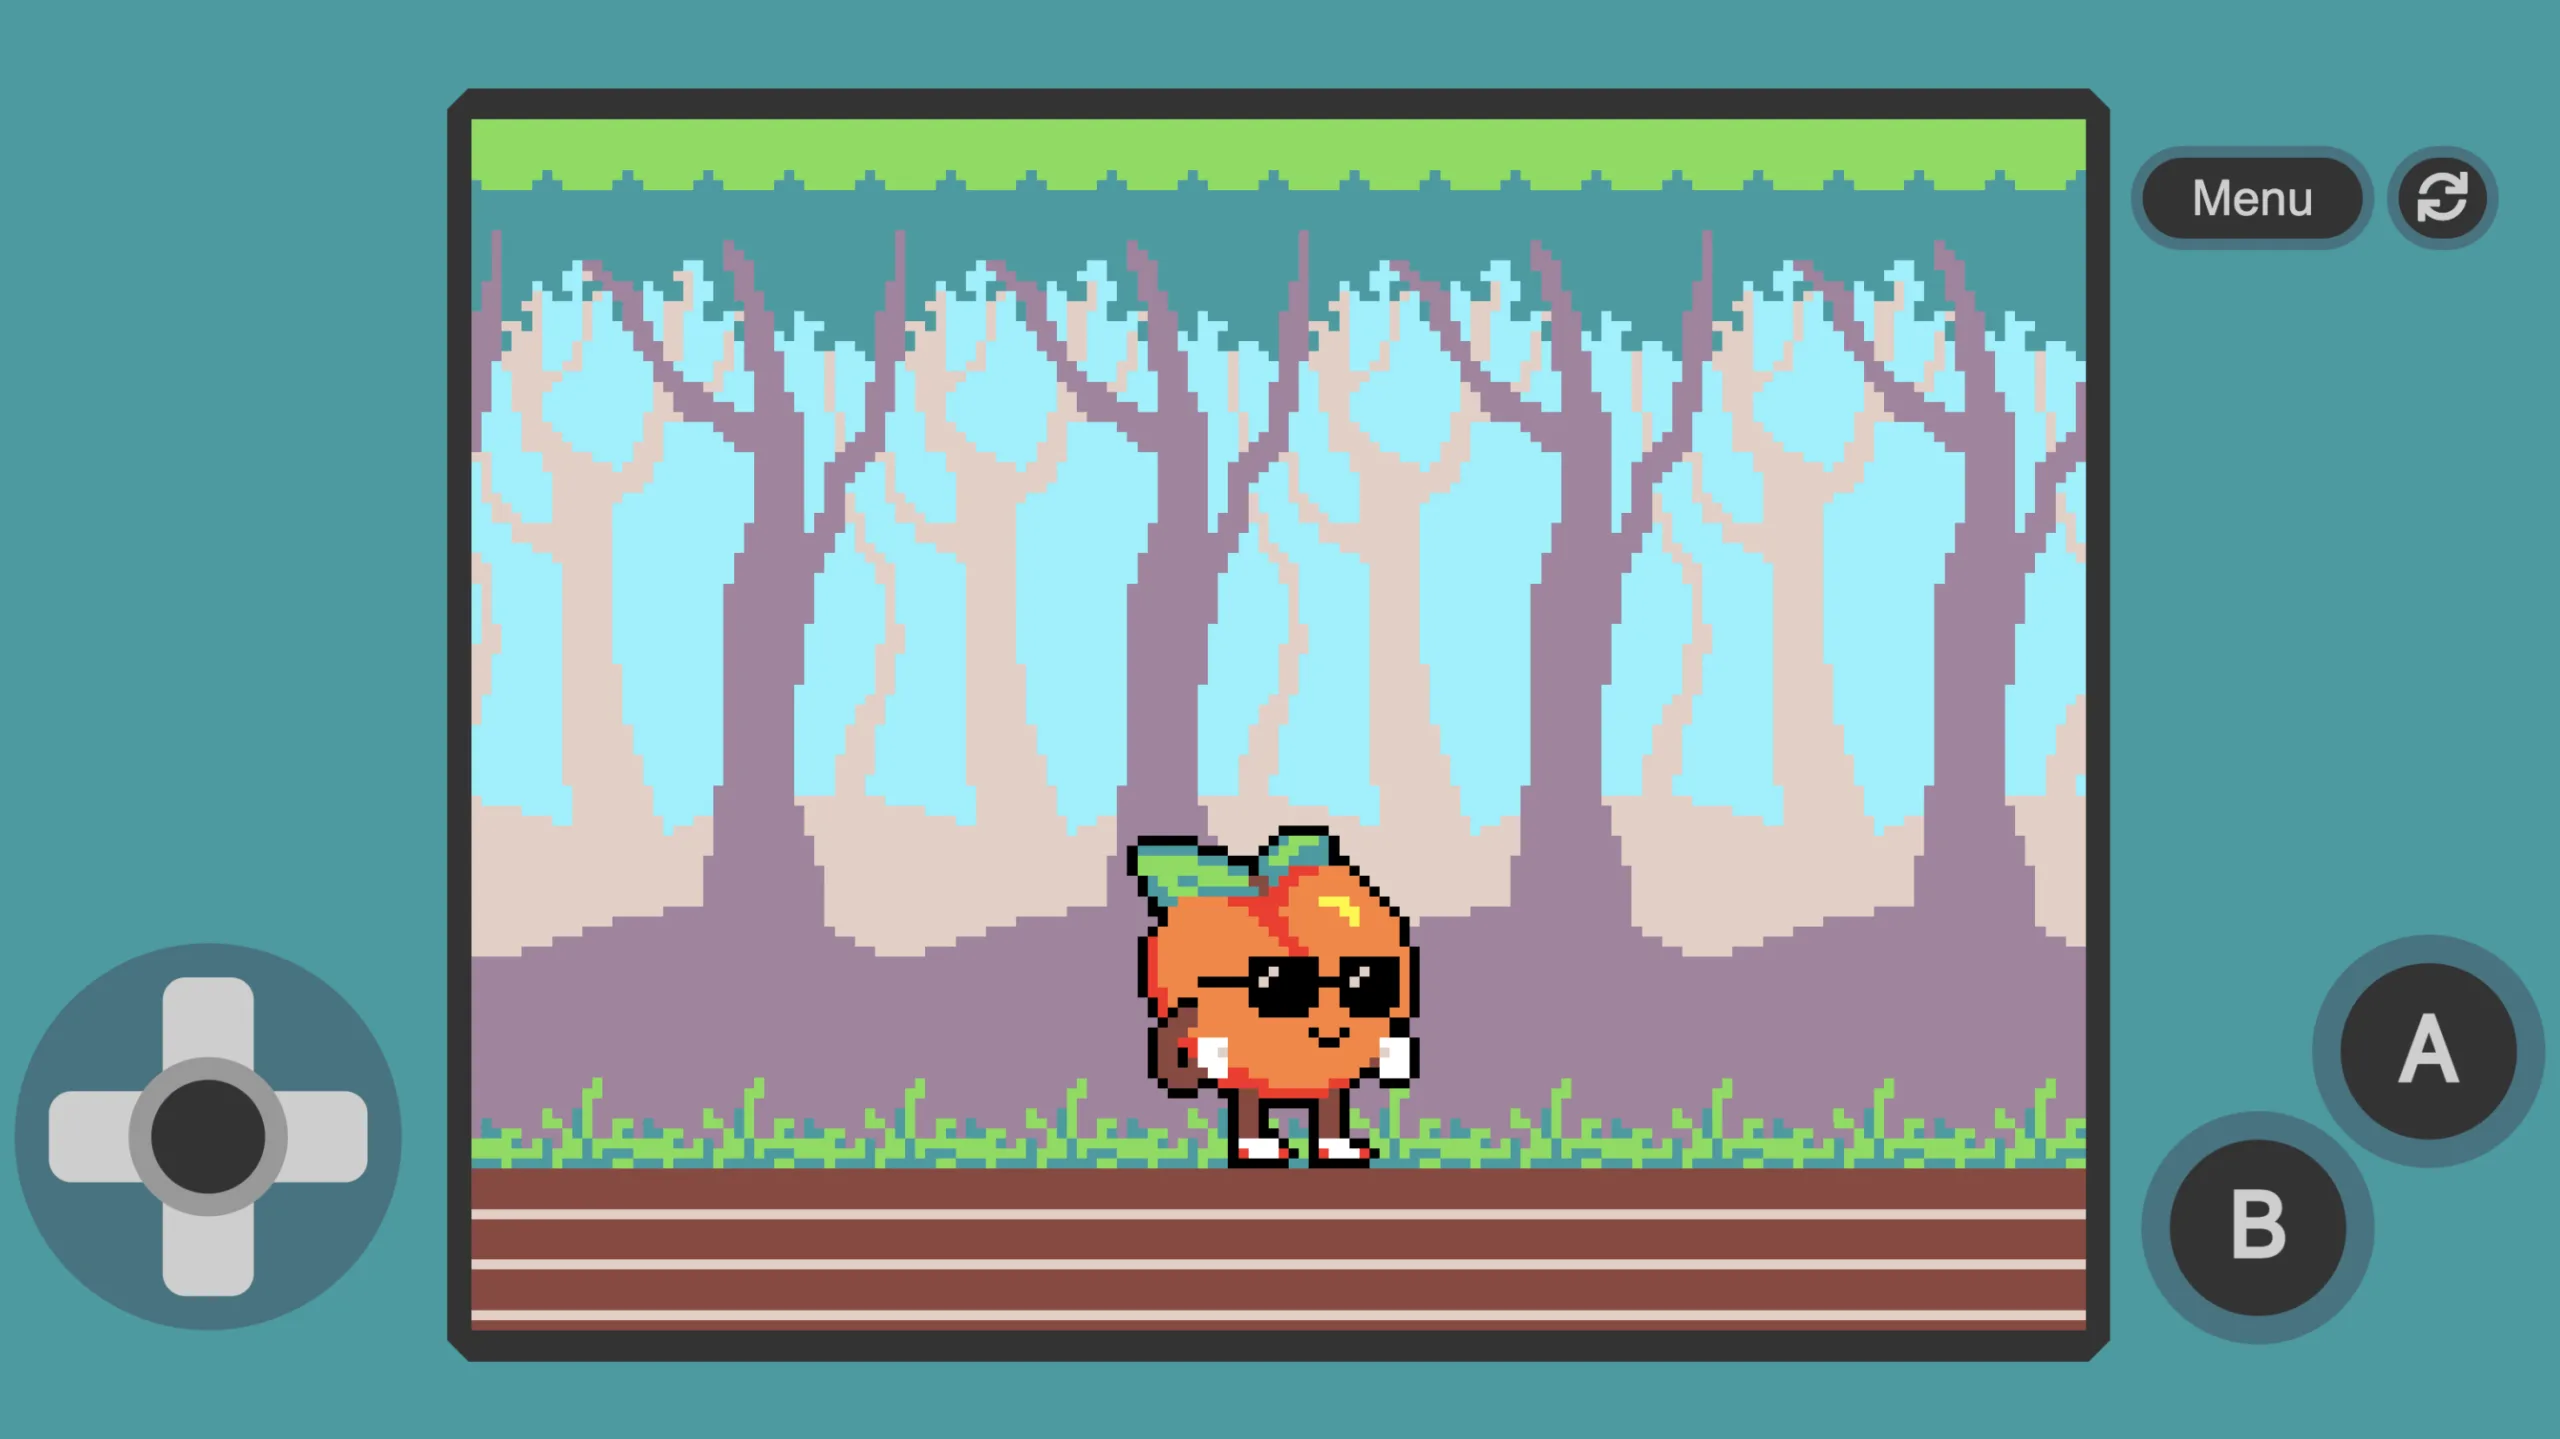 A screenshot of the Peach Racer game